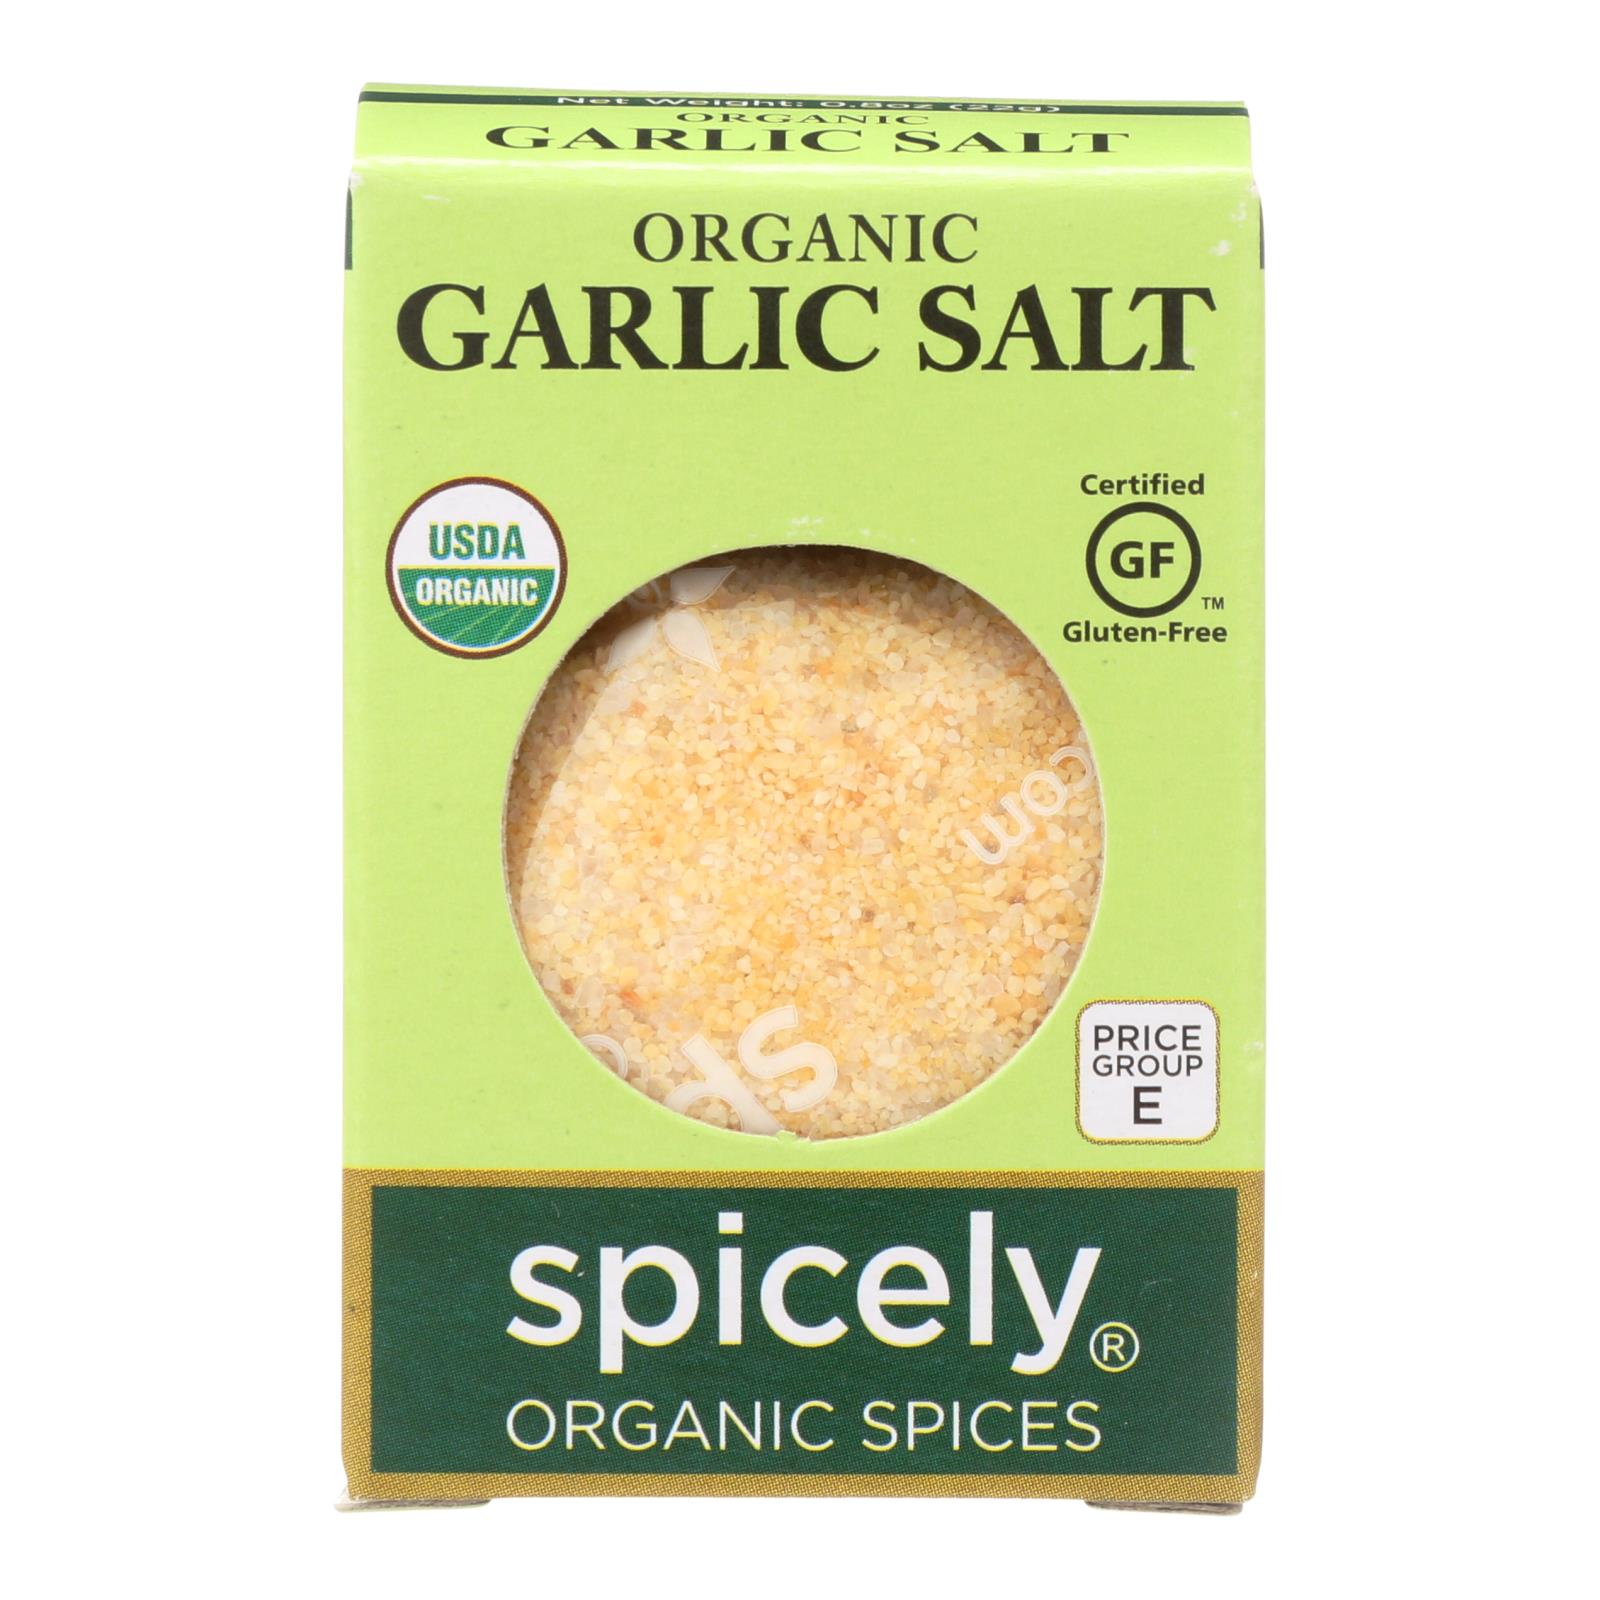 Spicely Organics - Organic Garlic Salt - 6개 묶음상품 - 0.8 oz.